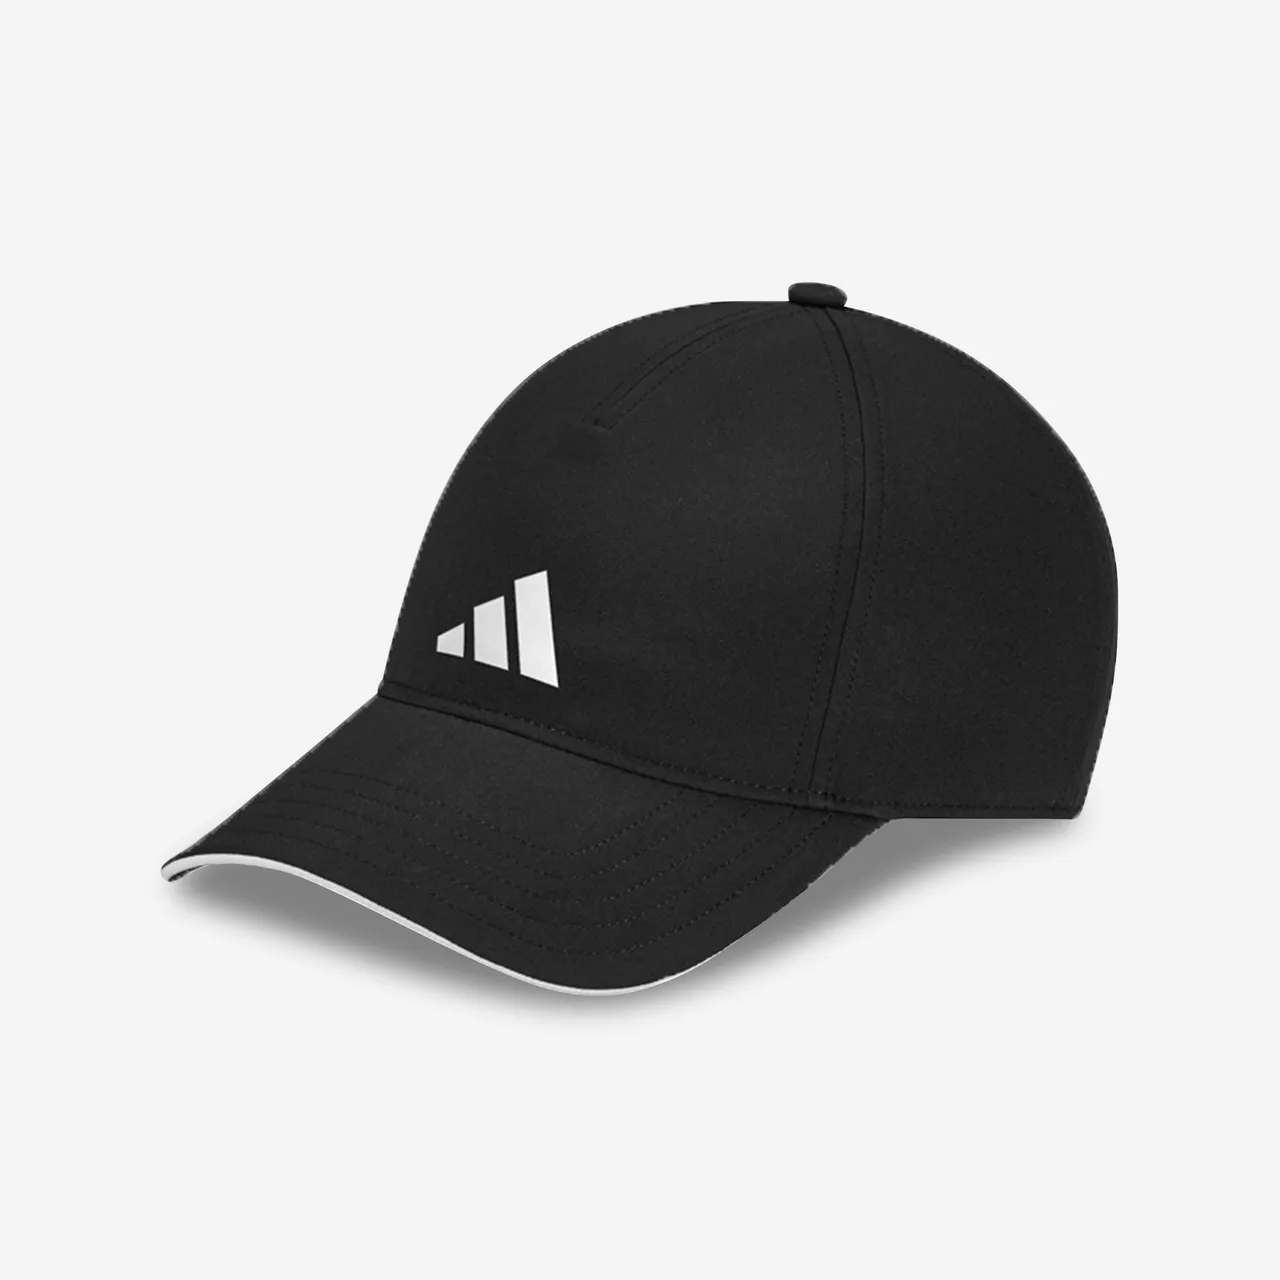 Sports Cap Size 58cm - Black